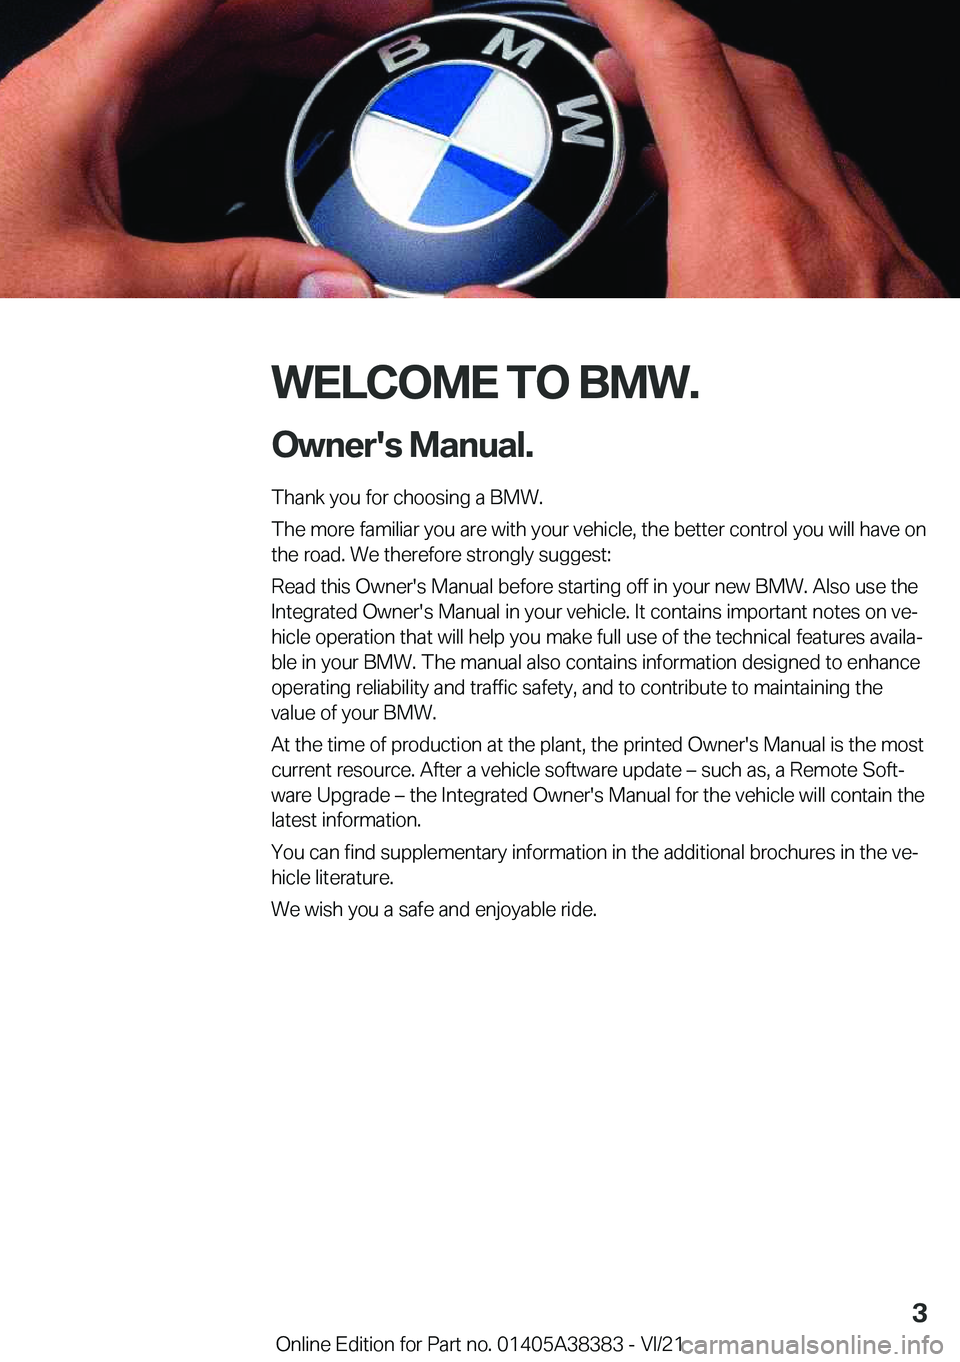 BMW 7 SERIES 2022  Owners Manual �W�E�L�C�O�M�E��T�O��B�M�W�.�O�w�n�e�r�'�s��M�a�n�u�a�l�.
�T�h�a�n�k��y�o�u��f�o�r��c�h�o�o�s�i�n�g��a��B�M�W�.
�T�h�e��m�o�r�e��f�a�m�i�l�i�a�r��y�o�u��a�r�e��w�i�t�h��y�o�u�r��v�e